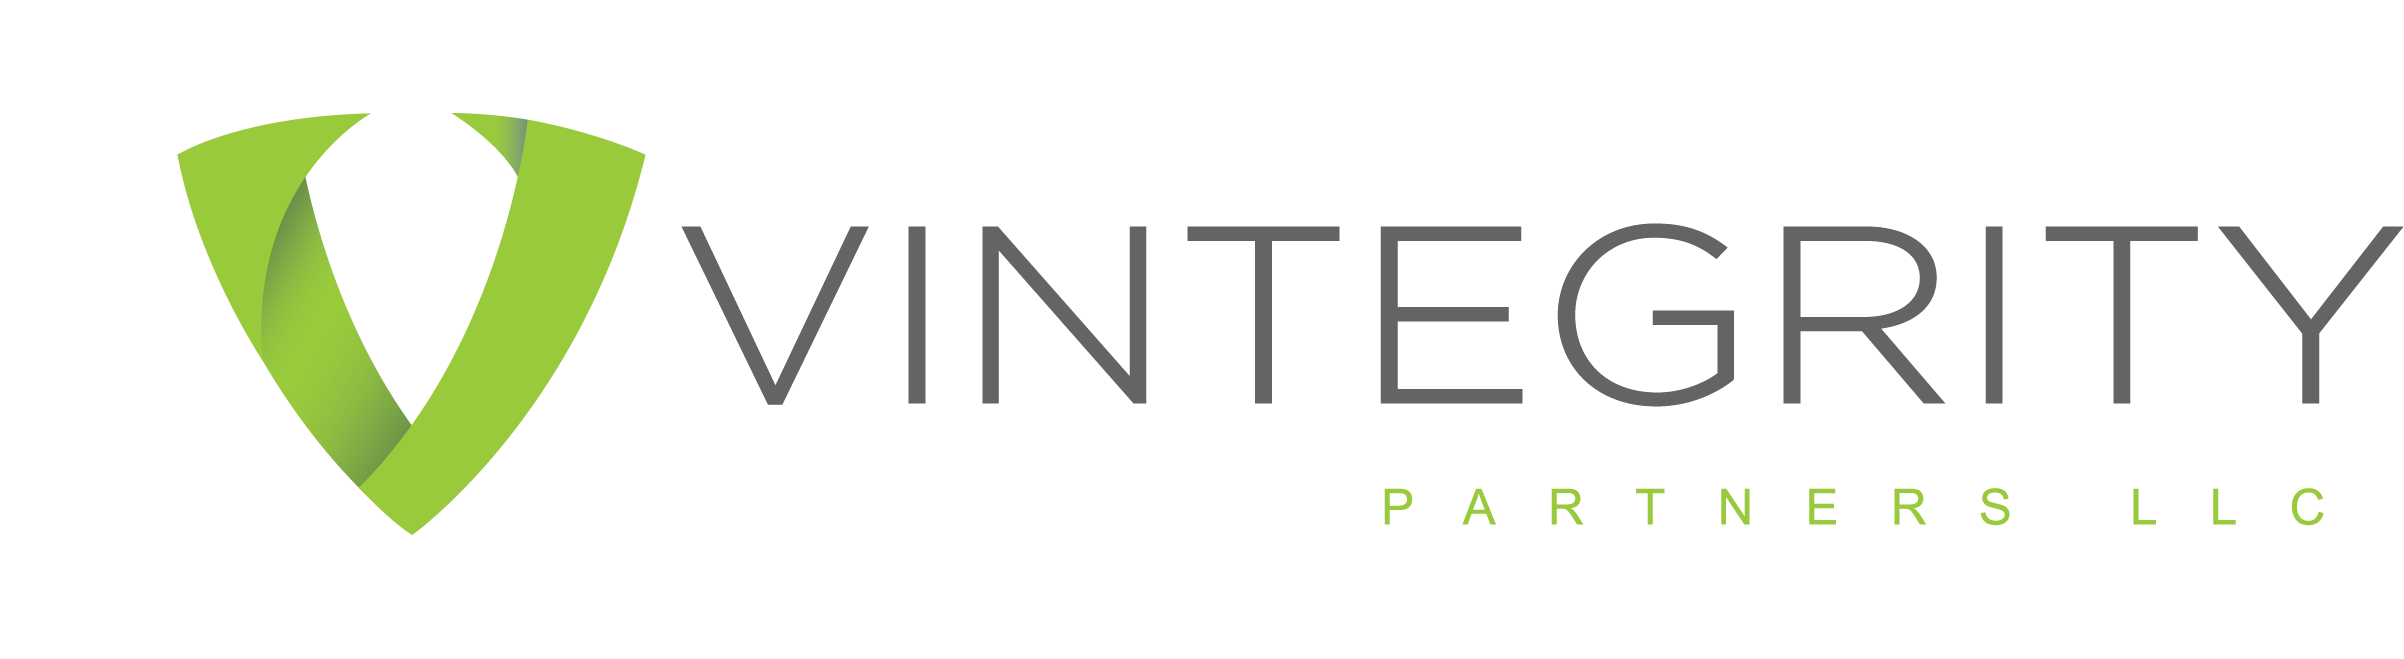 Vintegrity Partners – Workforce Optimization & Management